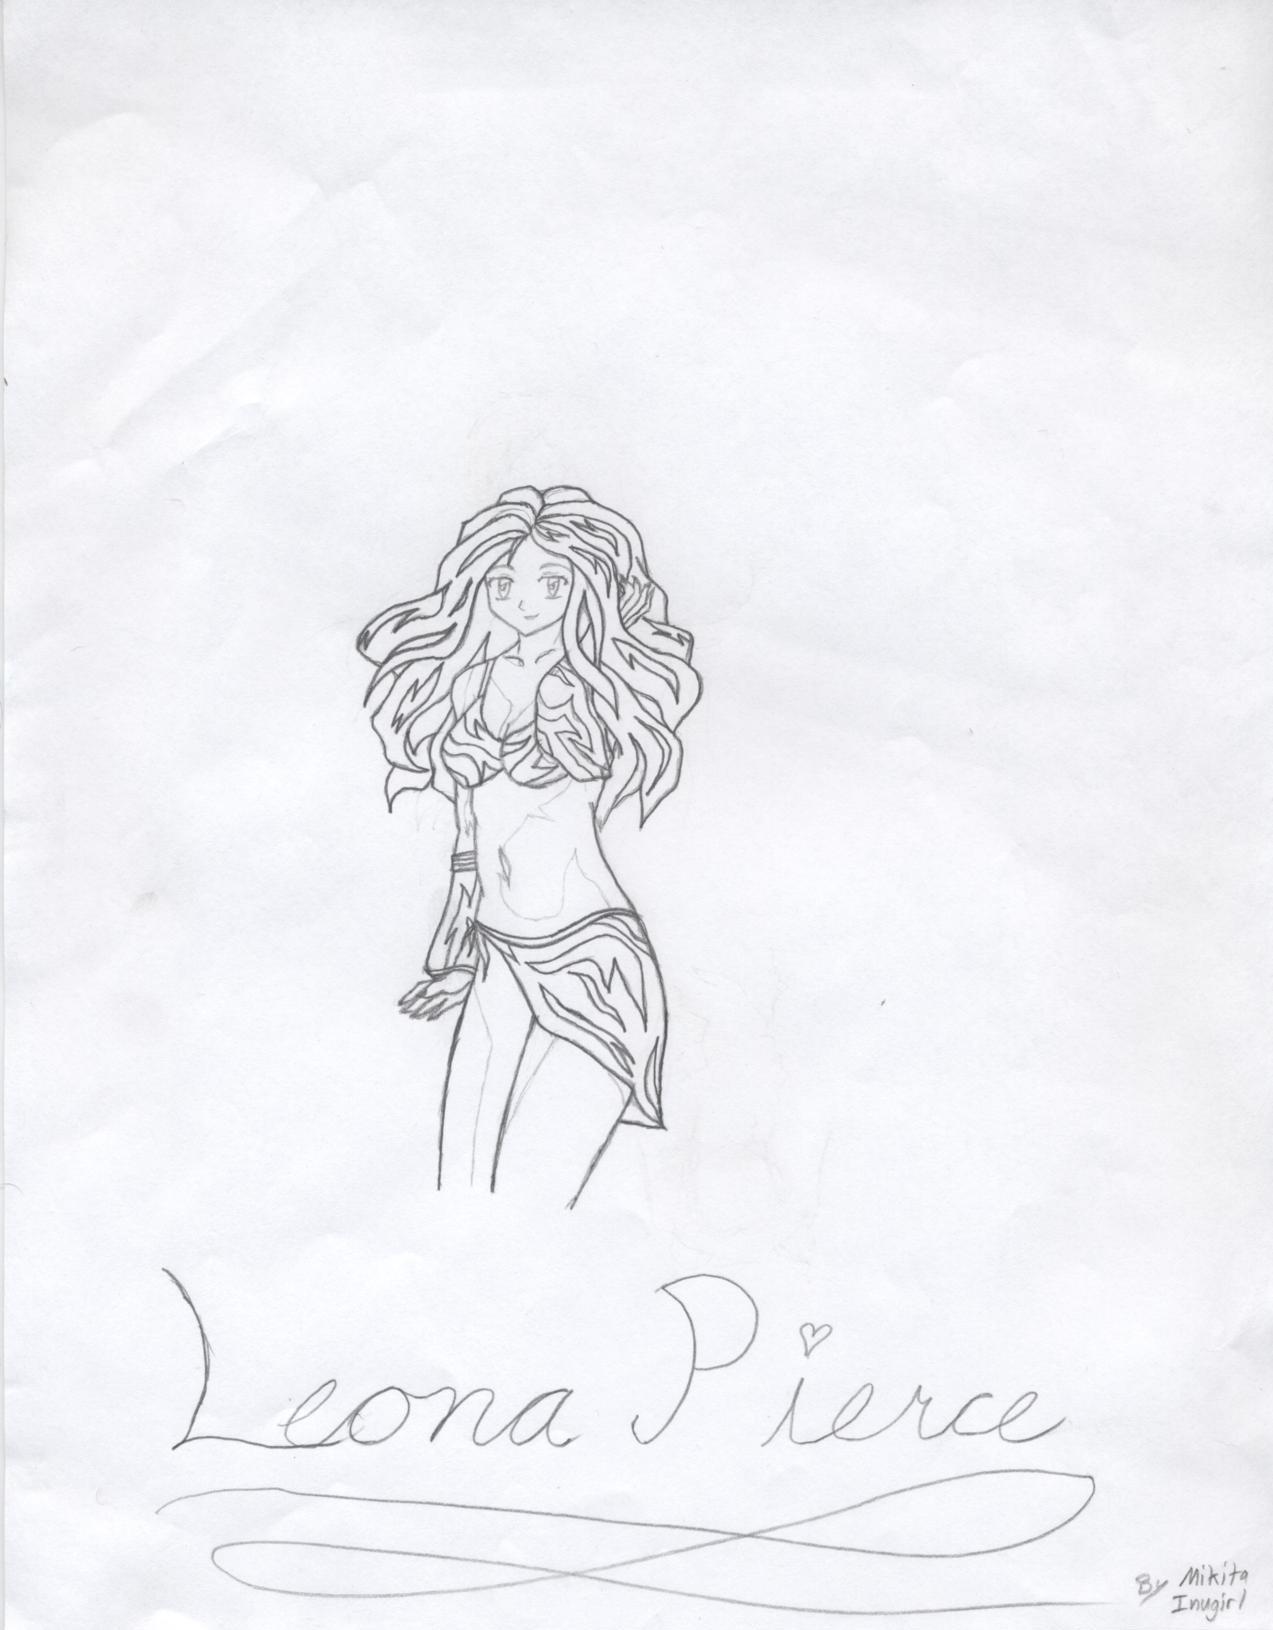 Leona Pierce (New style) Woo! by mikita_inugirl